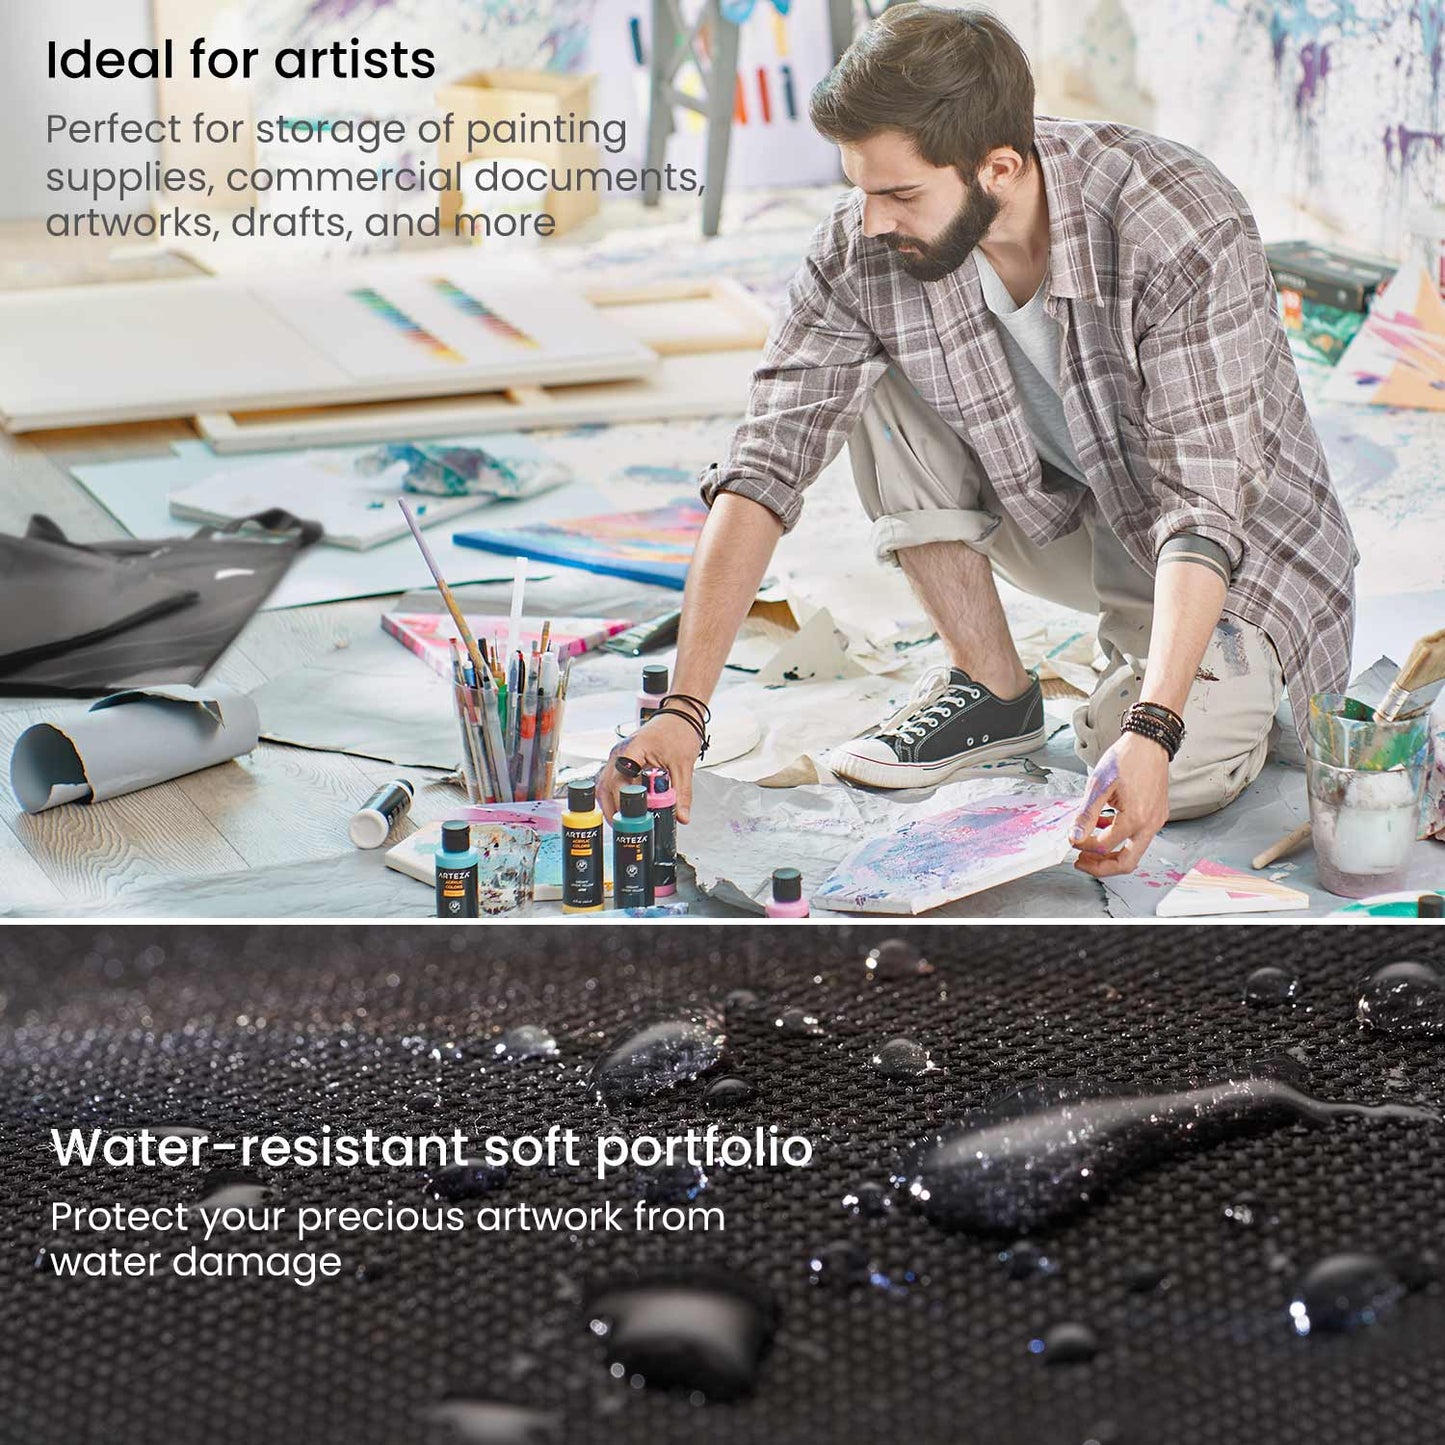 Portfolios - The Art Store/Commercial Art Supply